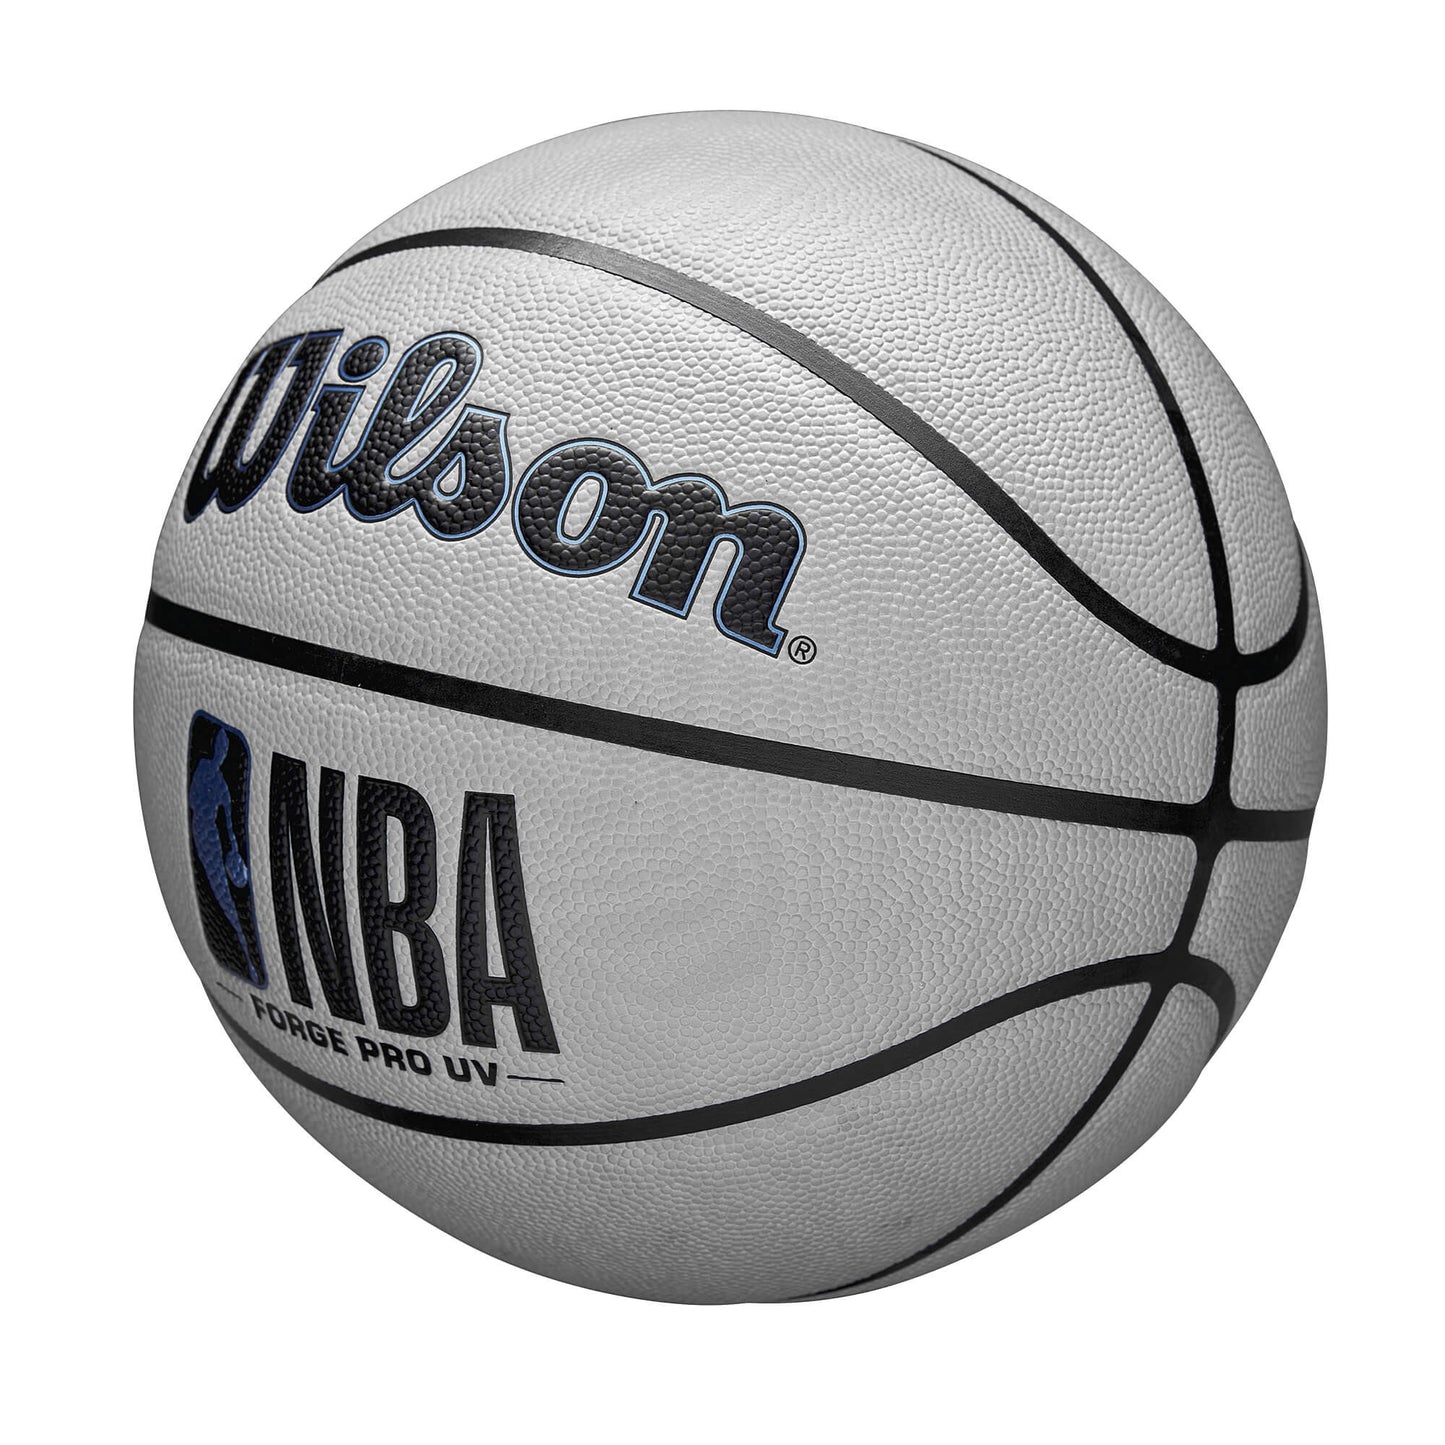 Wilson NBA Forge Pro UV Bskt - Sand (sz. 7)